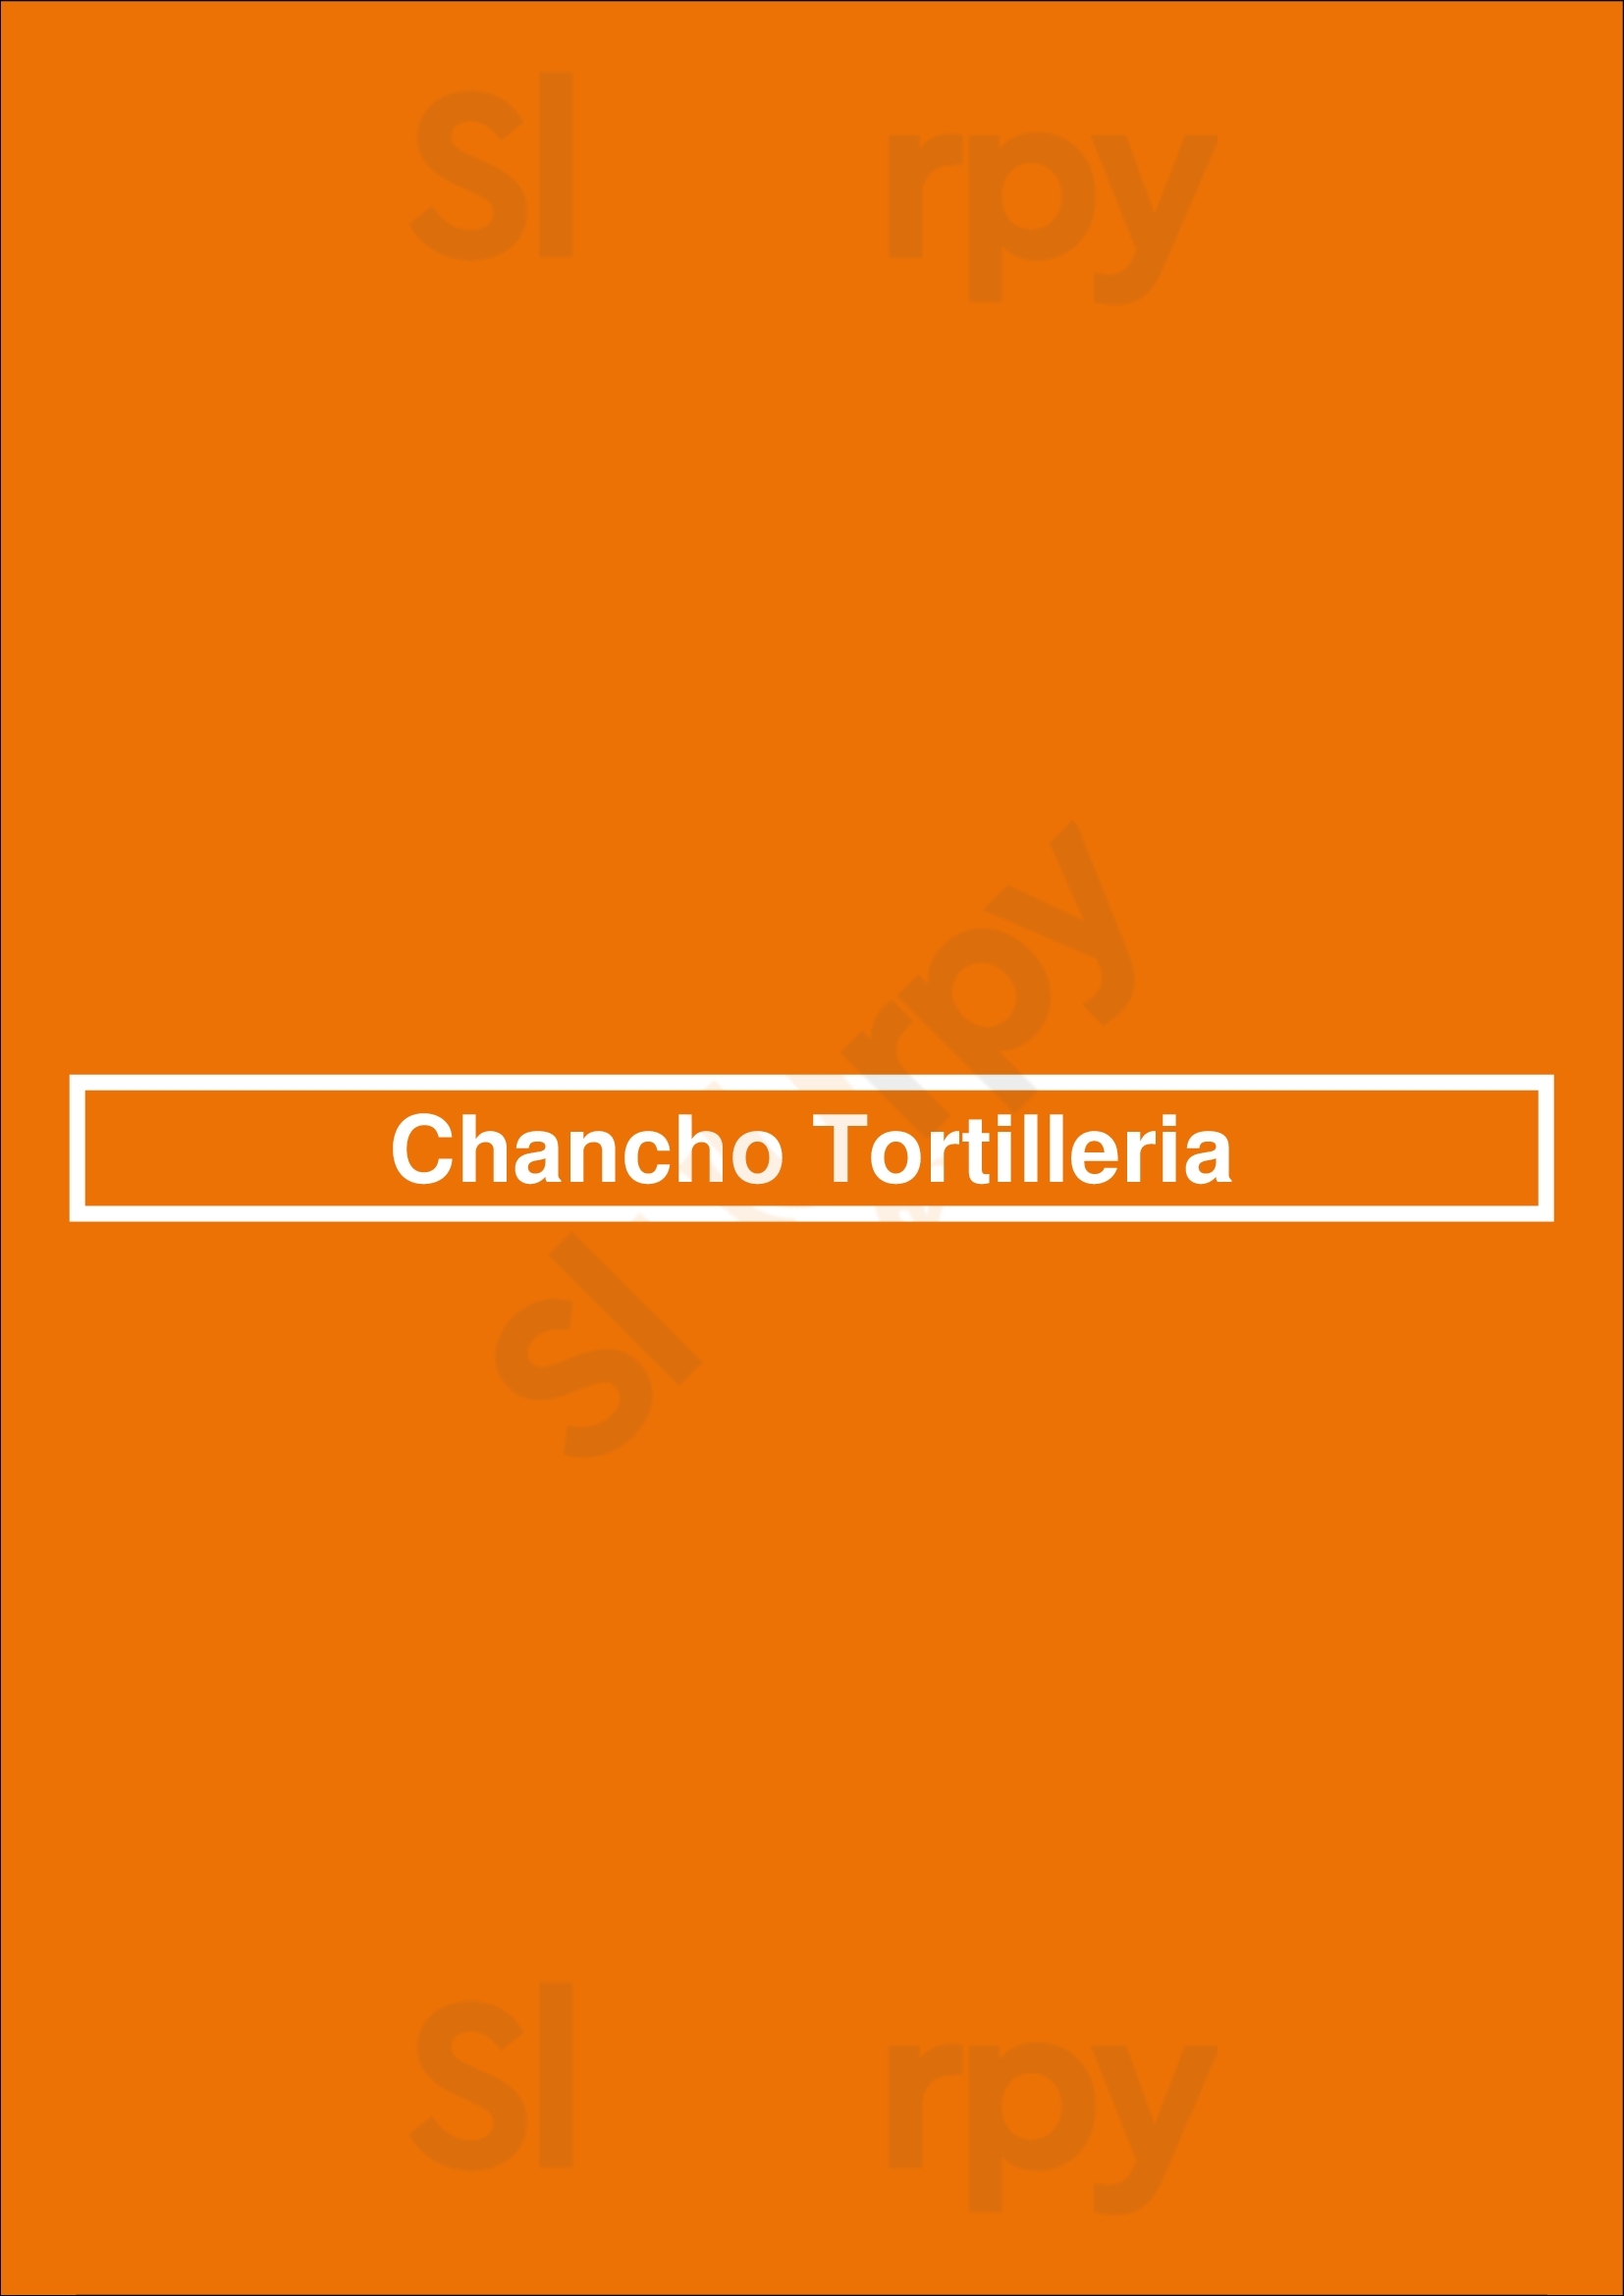 Chancho Tortilleria Vancouver Menu - 1